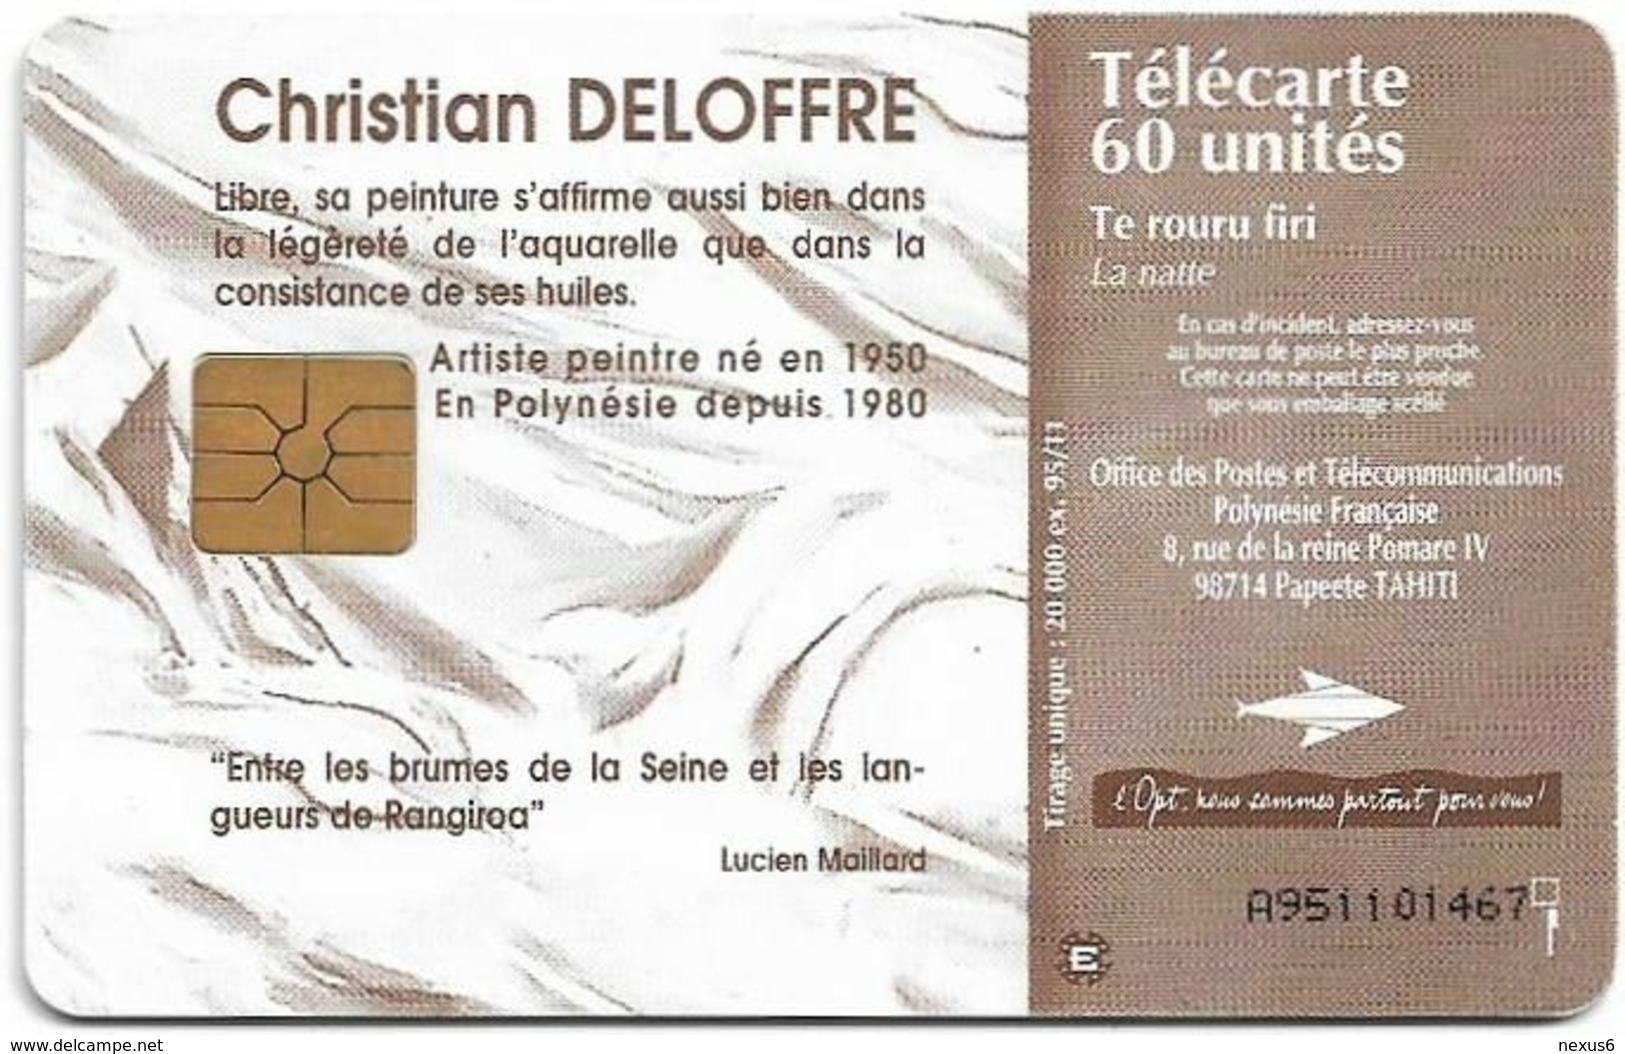 French Polynesia - OPT - Te Rouru Firi, La Natte, Gem1A Symmetr. Black, 11.1995, 60Units, 20.000ex, Used - Polynésie Française